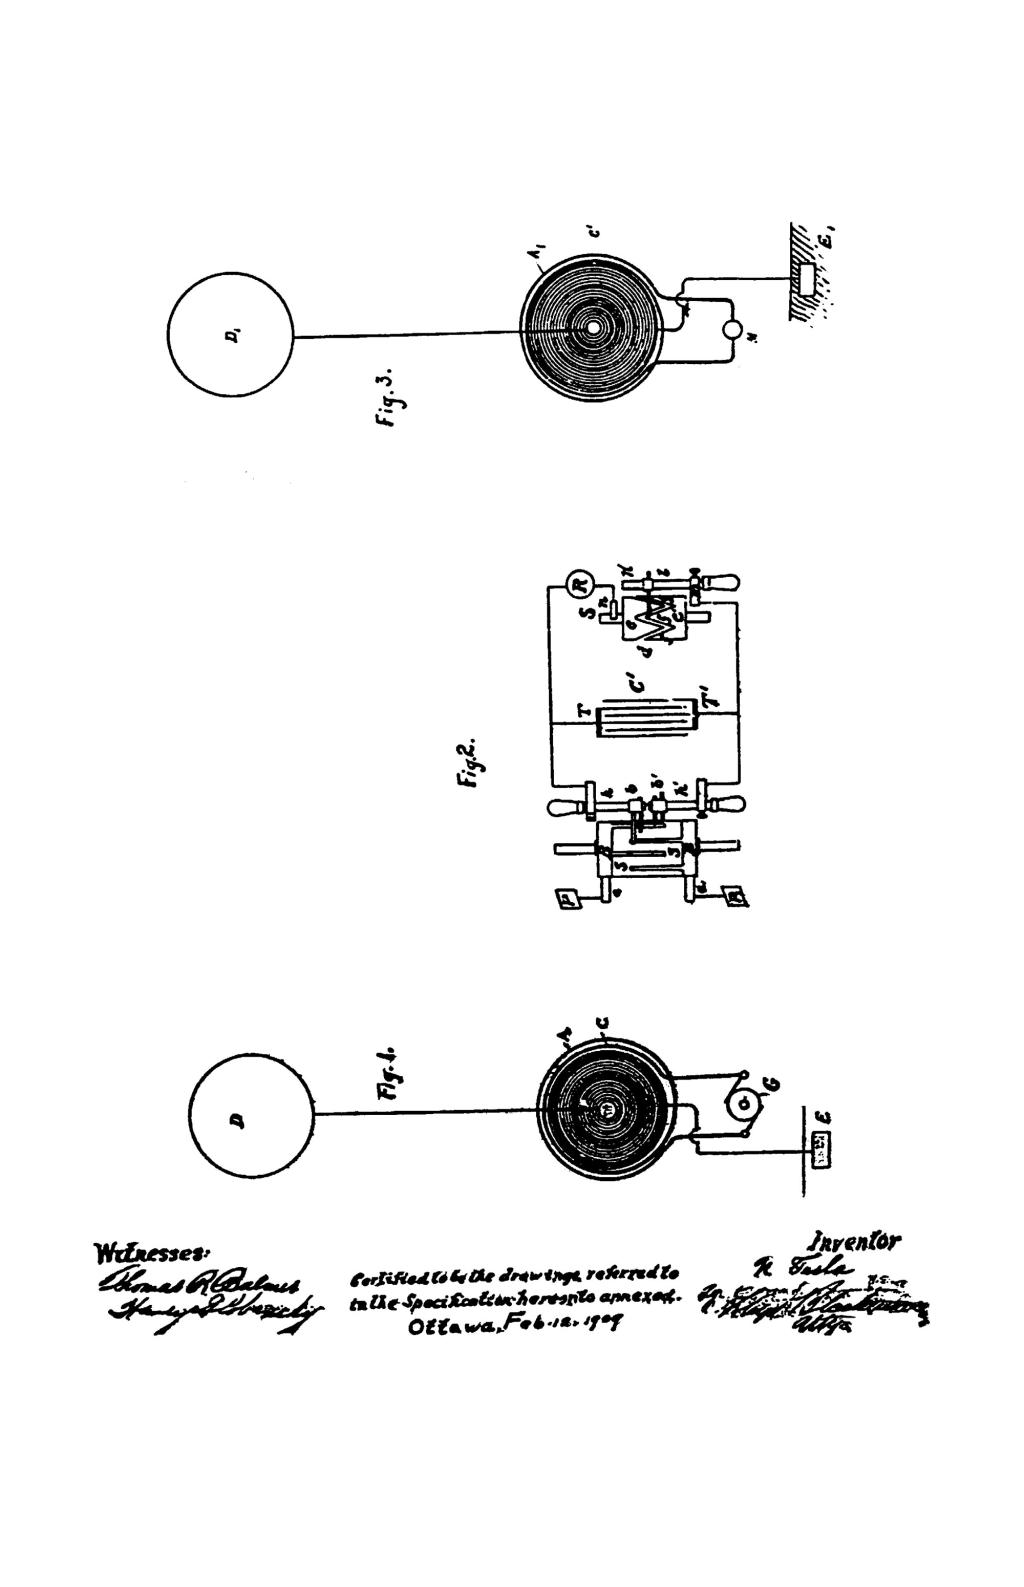 Nikola Tesla Canadian Patent 142352 - Art of Transmitting Electrical Energy through the Natural Mediums - Image 1